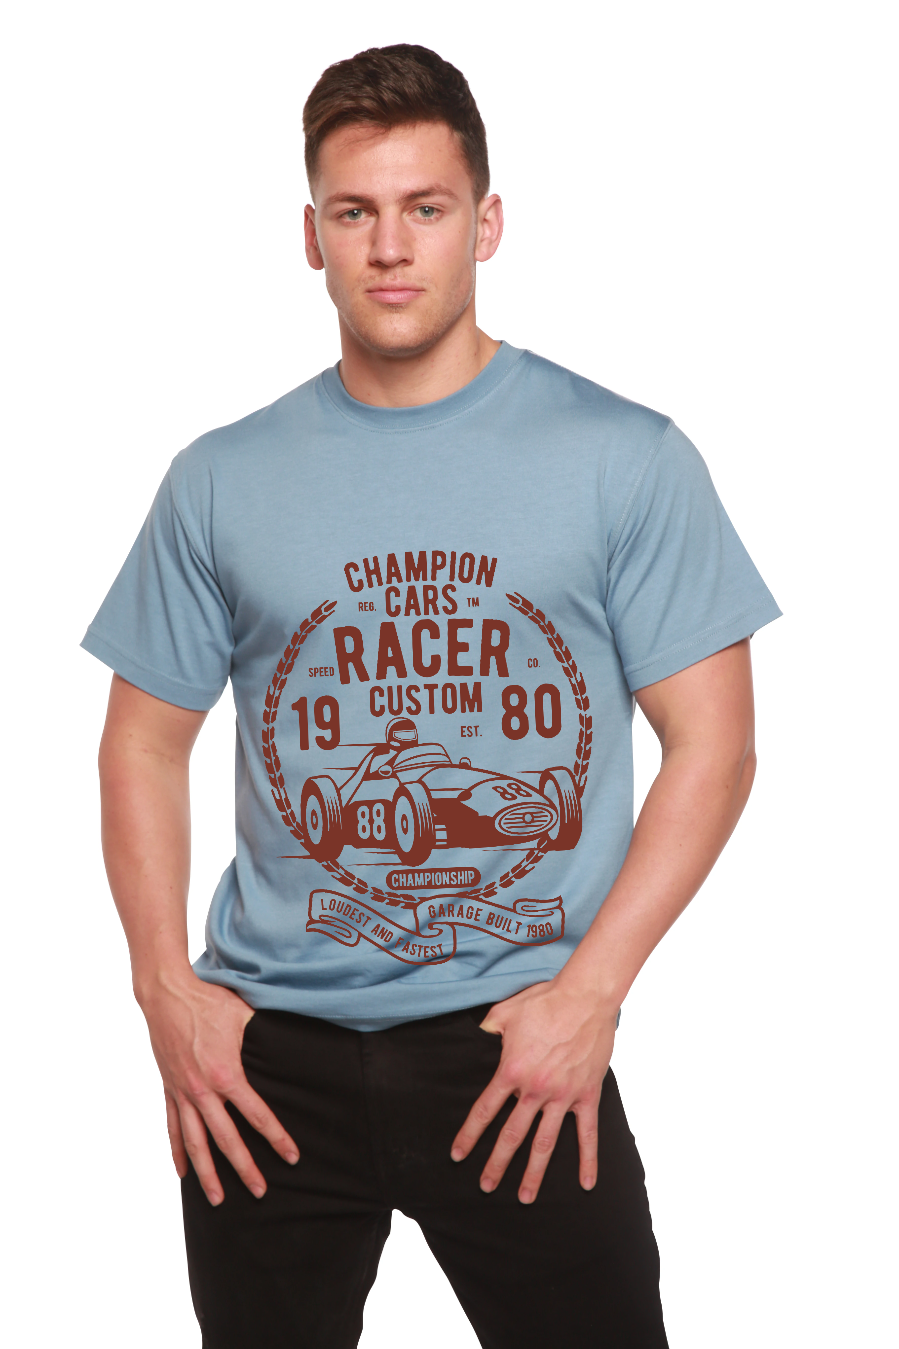 Champions Cars Men's Bamboo Viscose/Organic Cotton Short Sleeve T-Shirt - Spun Bamboo